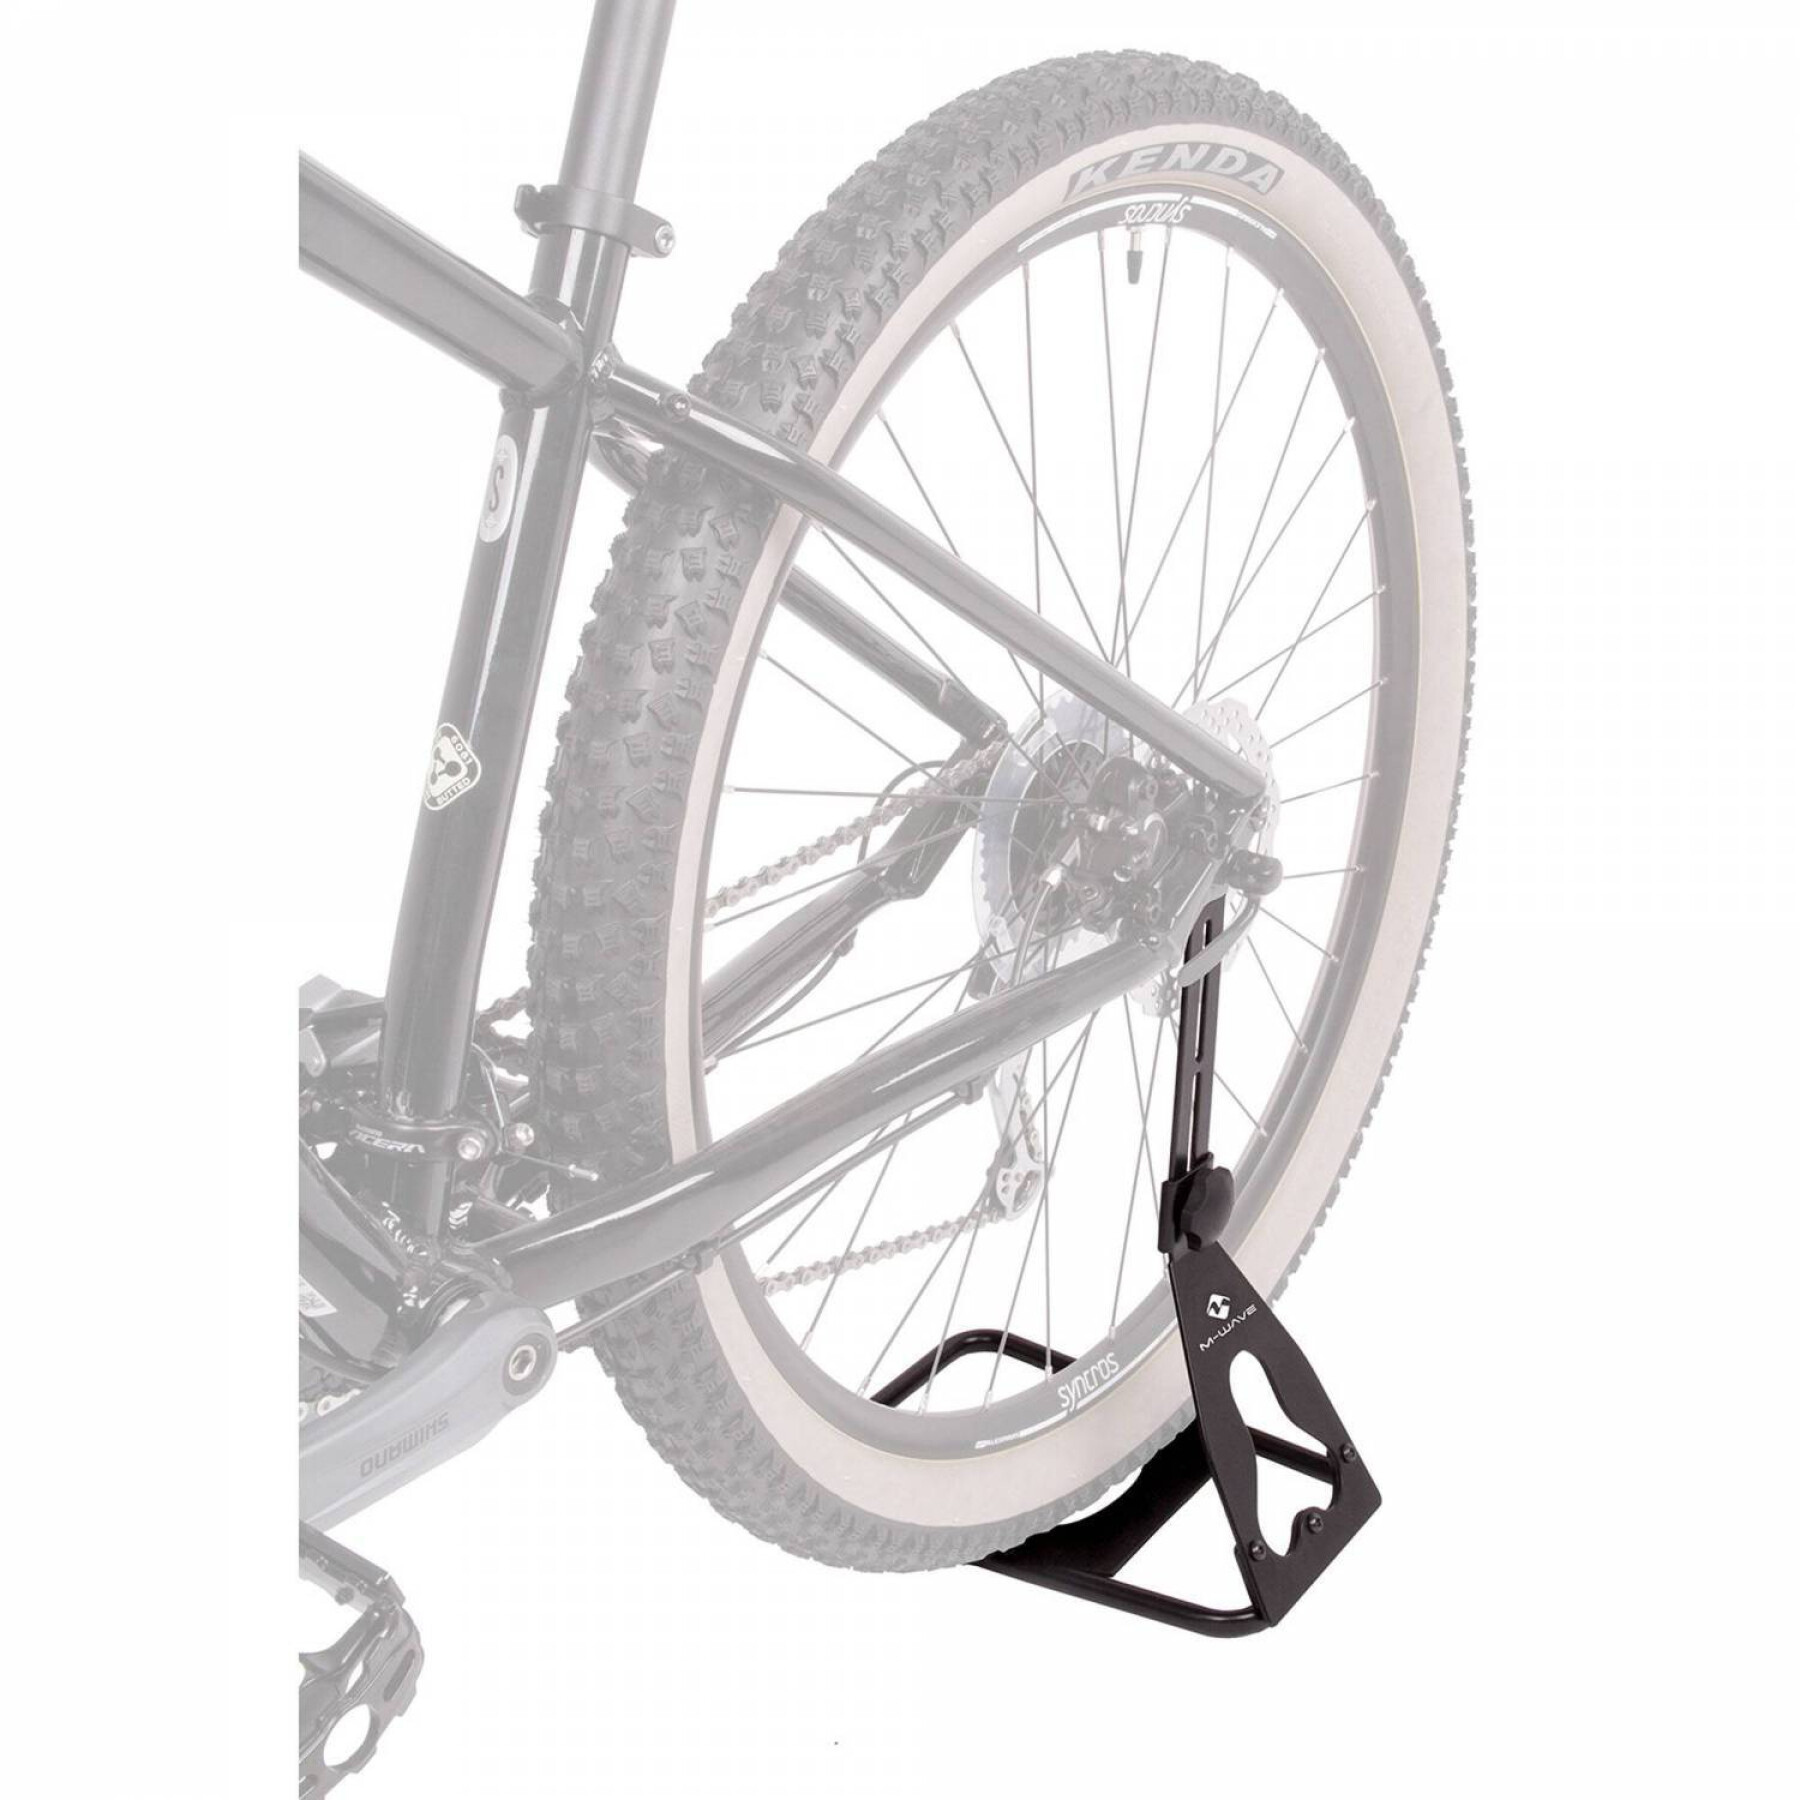 Verstelbare achterwiel fietsendrager met hoogteadapter M-Wave